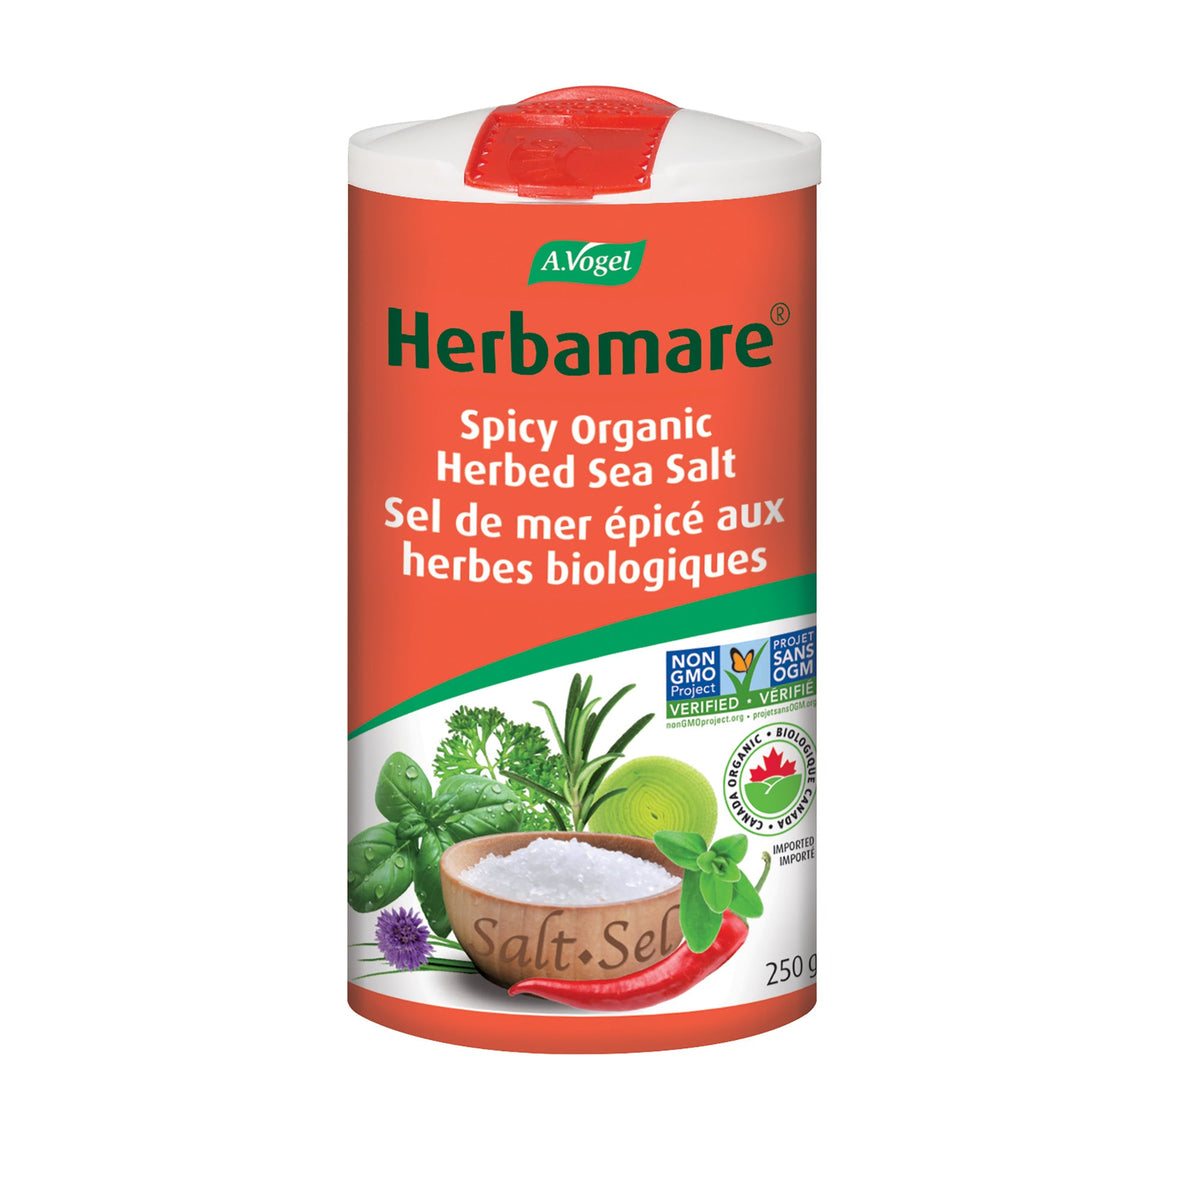 Herbamare Spicy - Organic Herbed Sea Salt - A.Vogel Canada